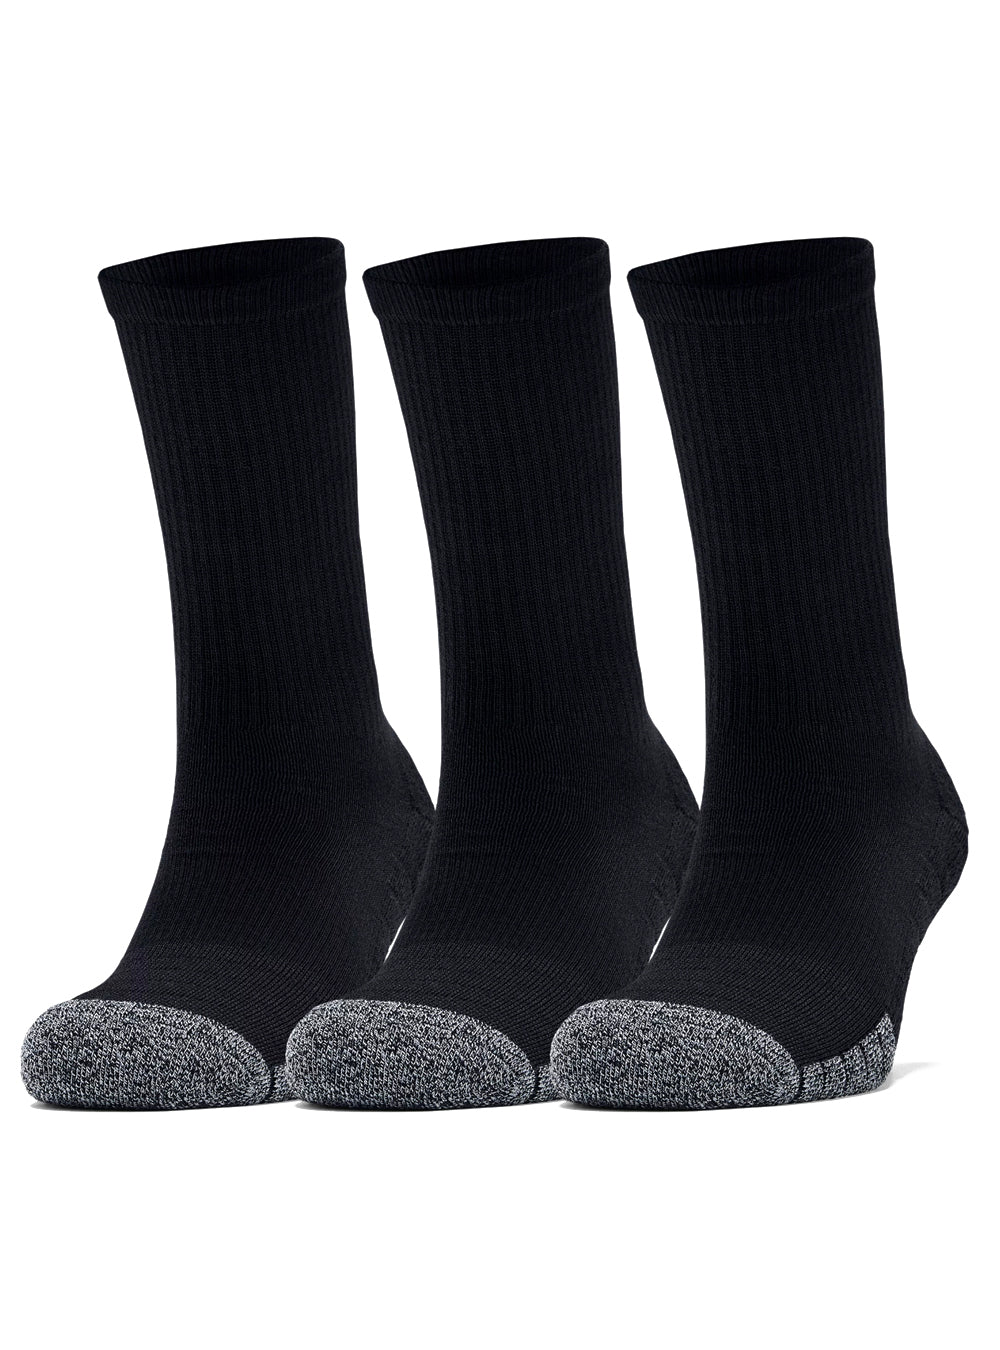 Under Armour Adult HeatGear® Crew Socks 3-Pack - Large